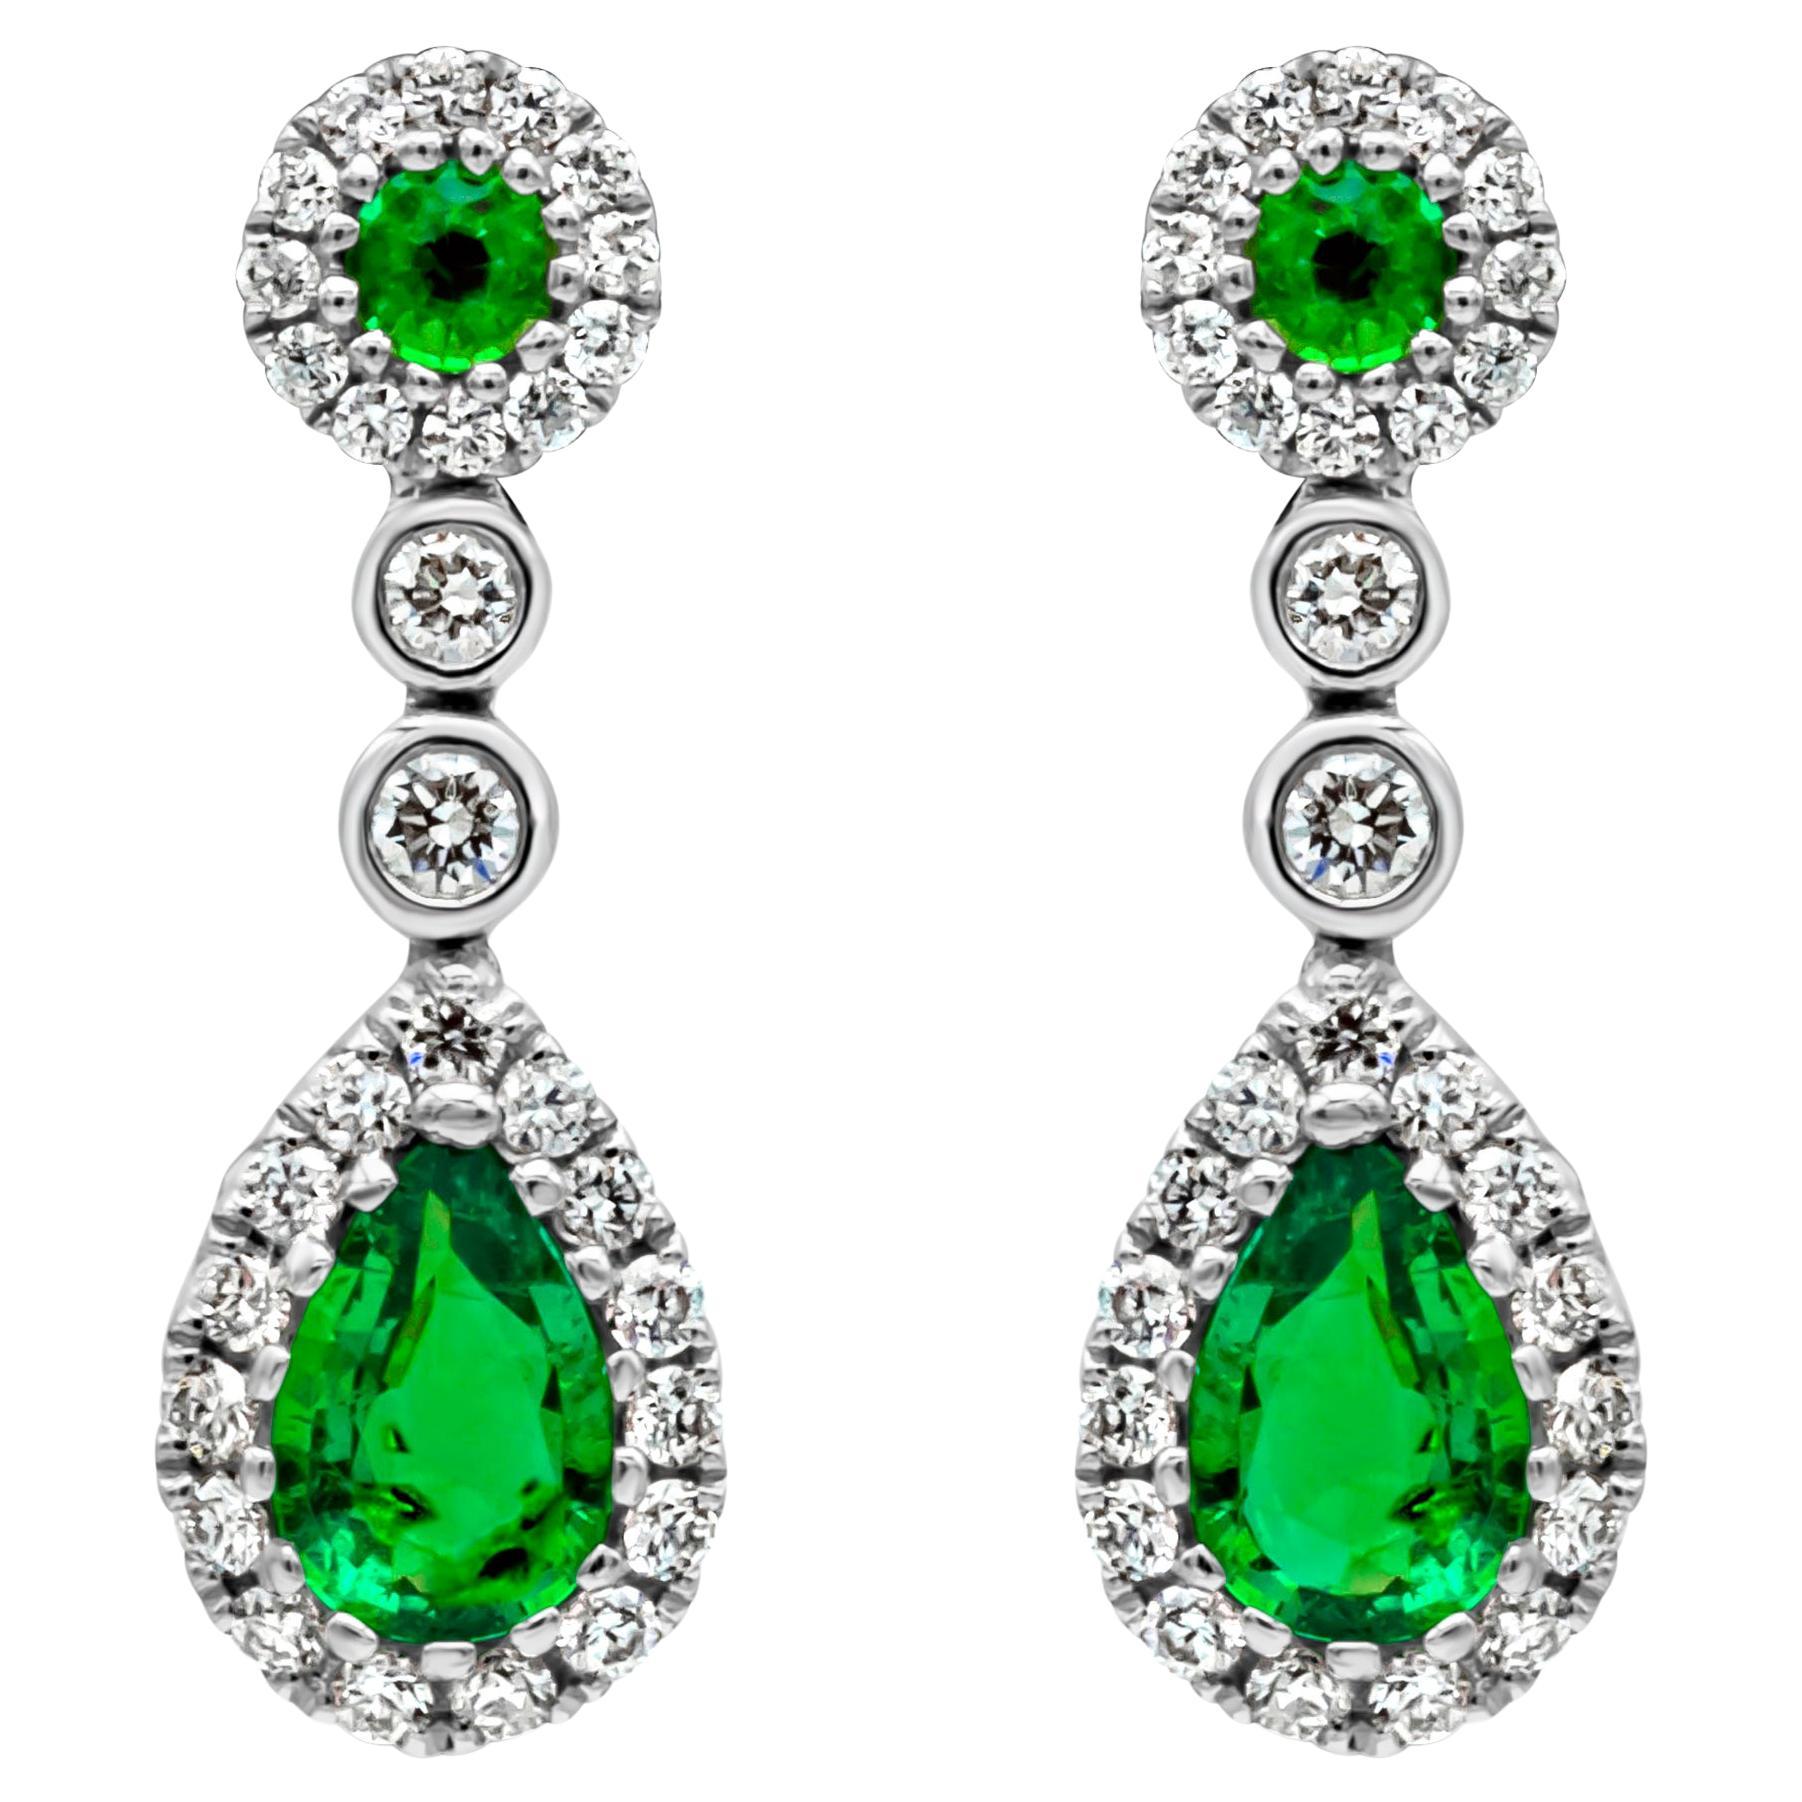 0.66 Carats Total Mixed Cut Colombian Green Emerald & Diamond Dangle Earrings For Sale